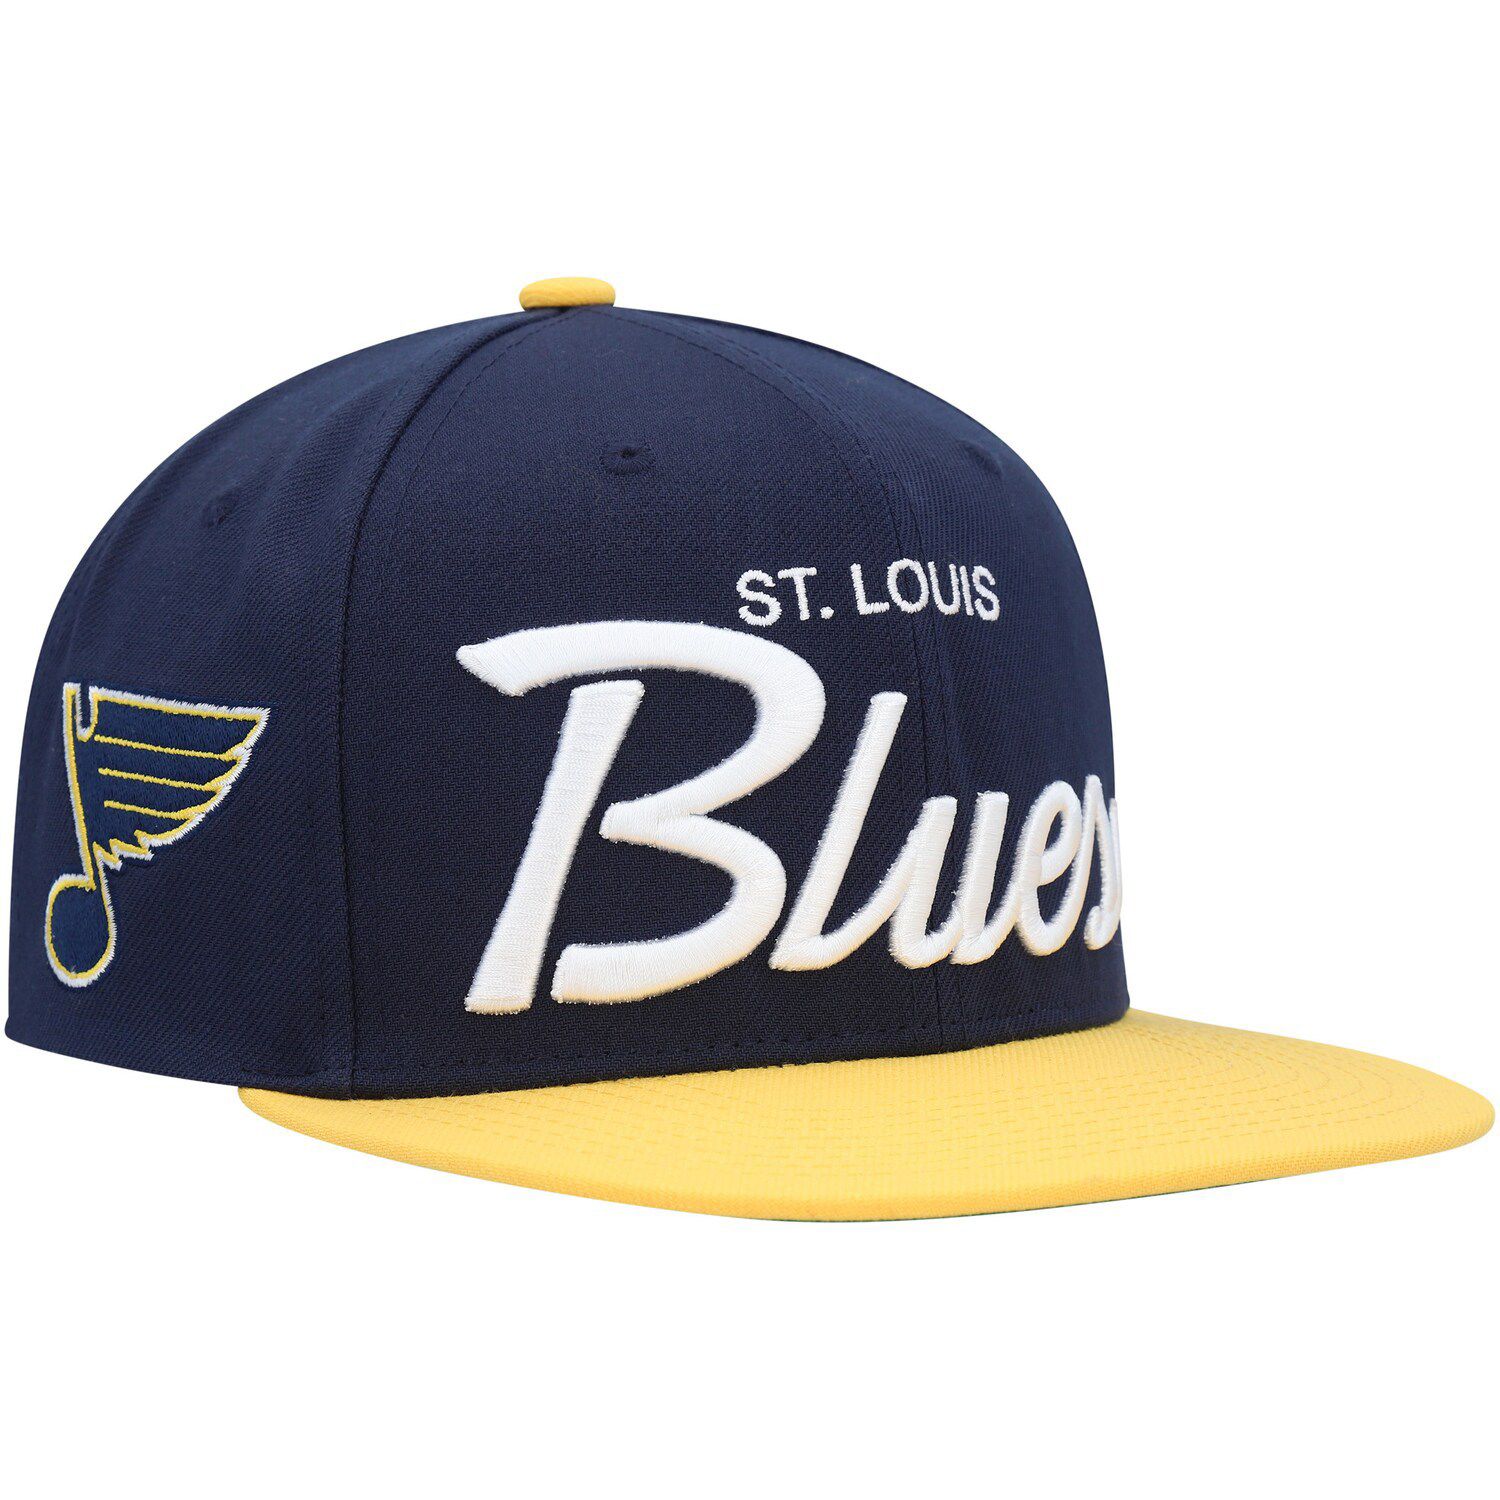 Outerstuff Youth Gold/Blue St. Louis Blues Team Tie-Dye Snapback Hat